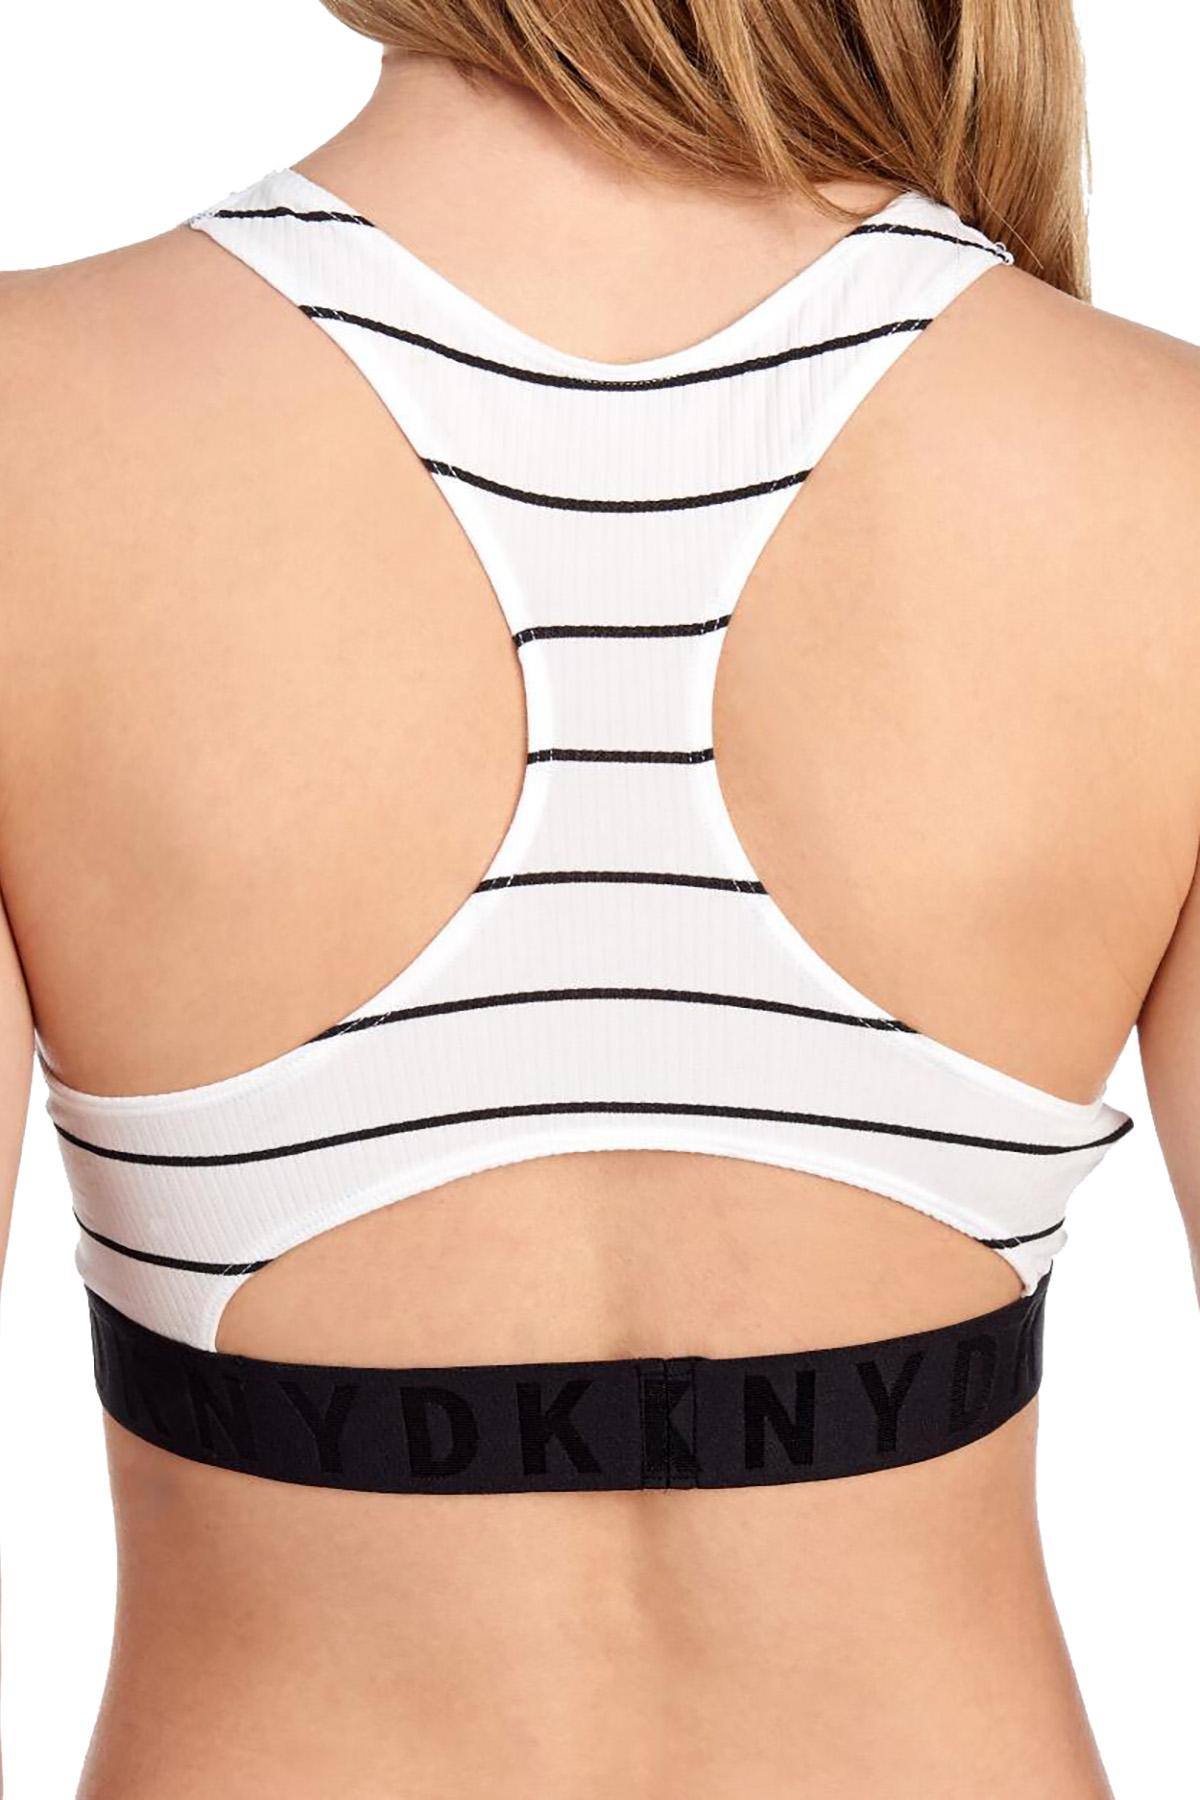 DKNY Black and White Stripe Logo Band Seamless Bralette